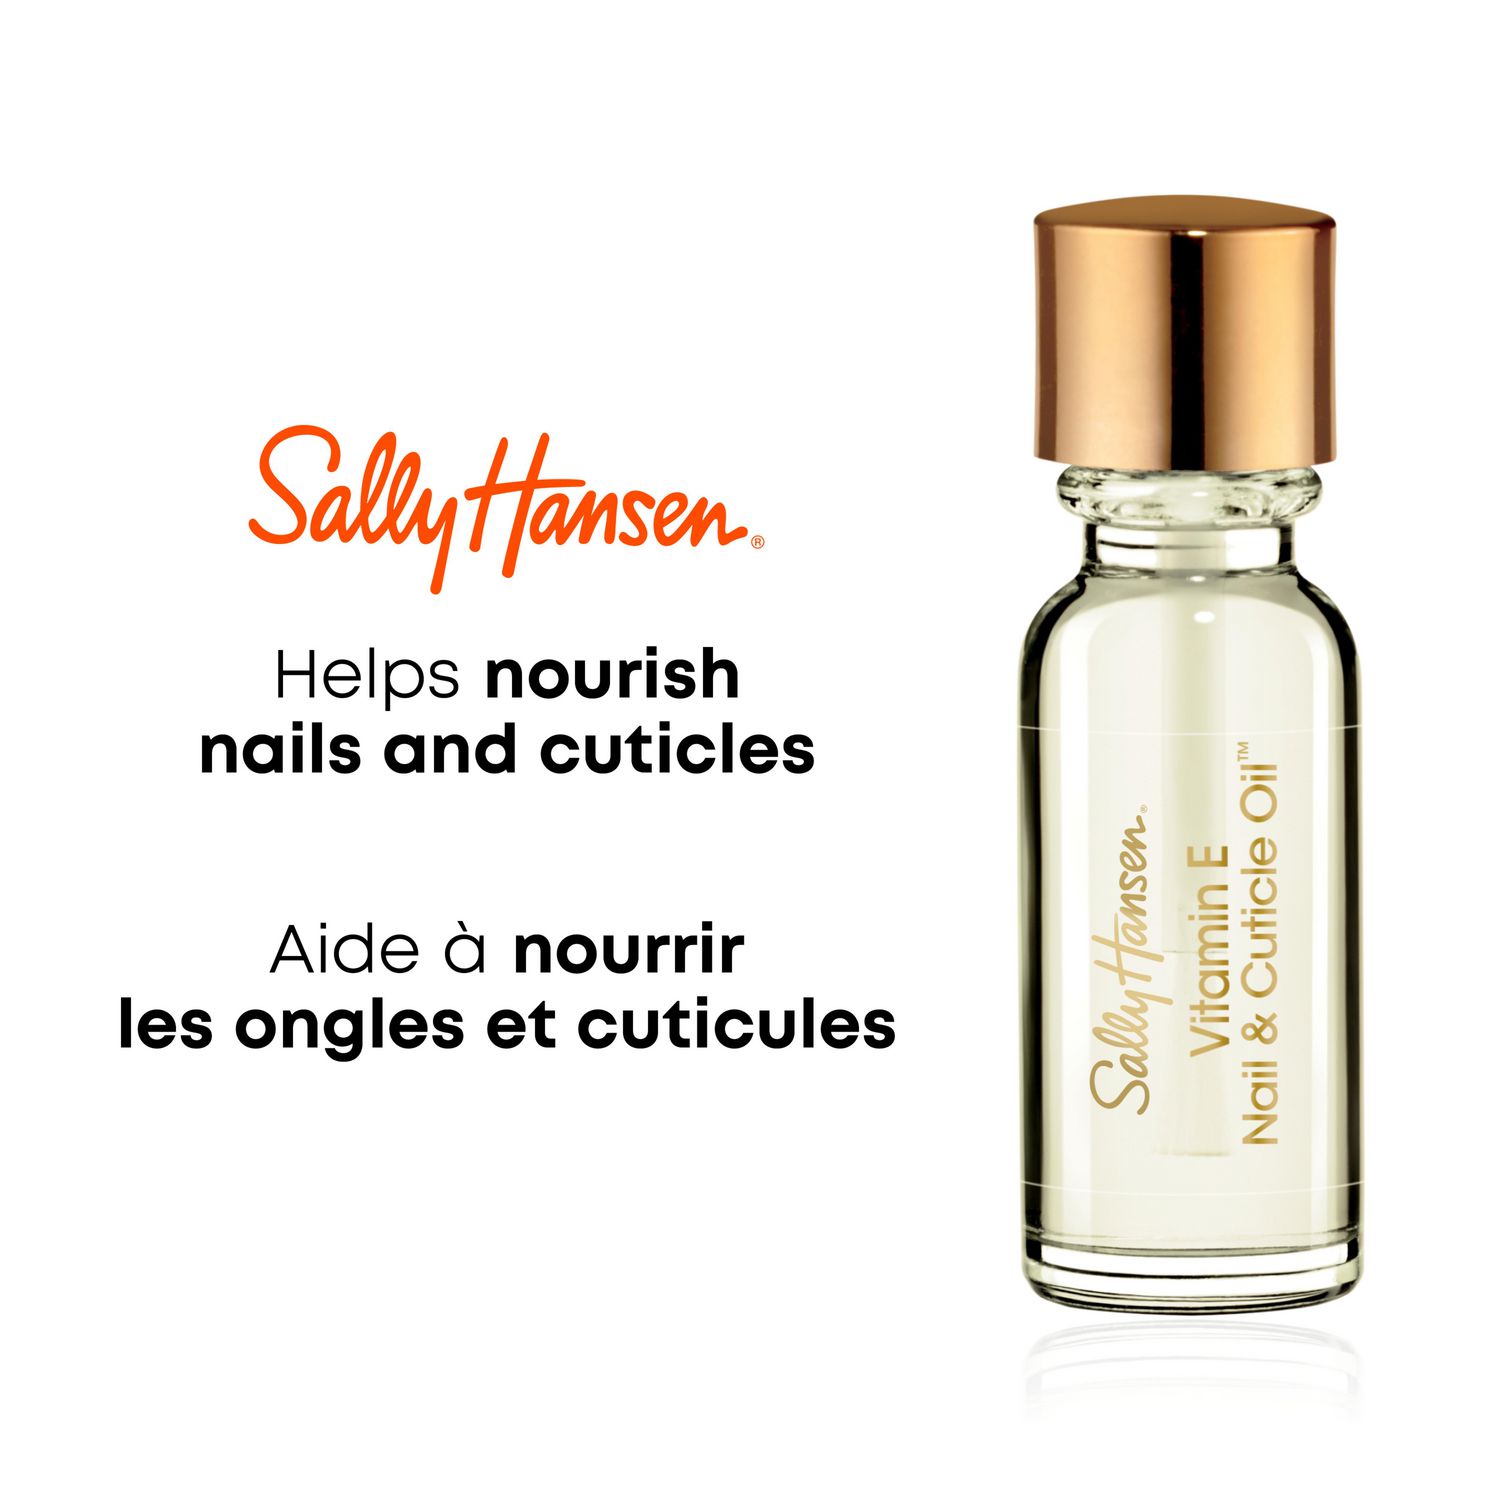 Sally Hansen Vitamin E Nail & Cuticle Oil - American Brand | eBay